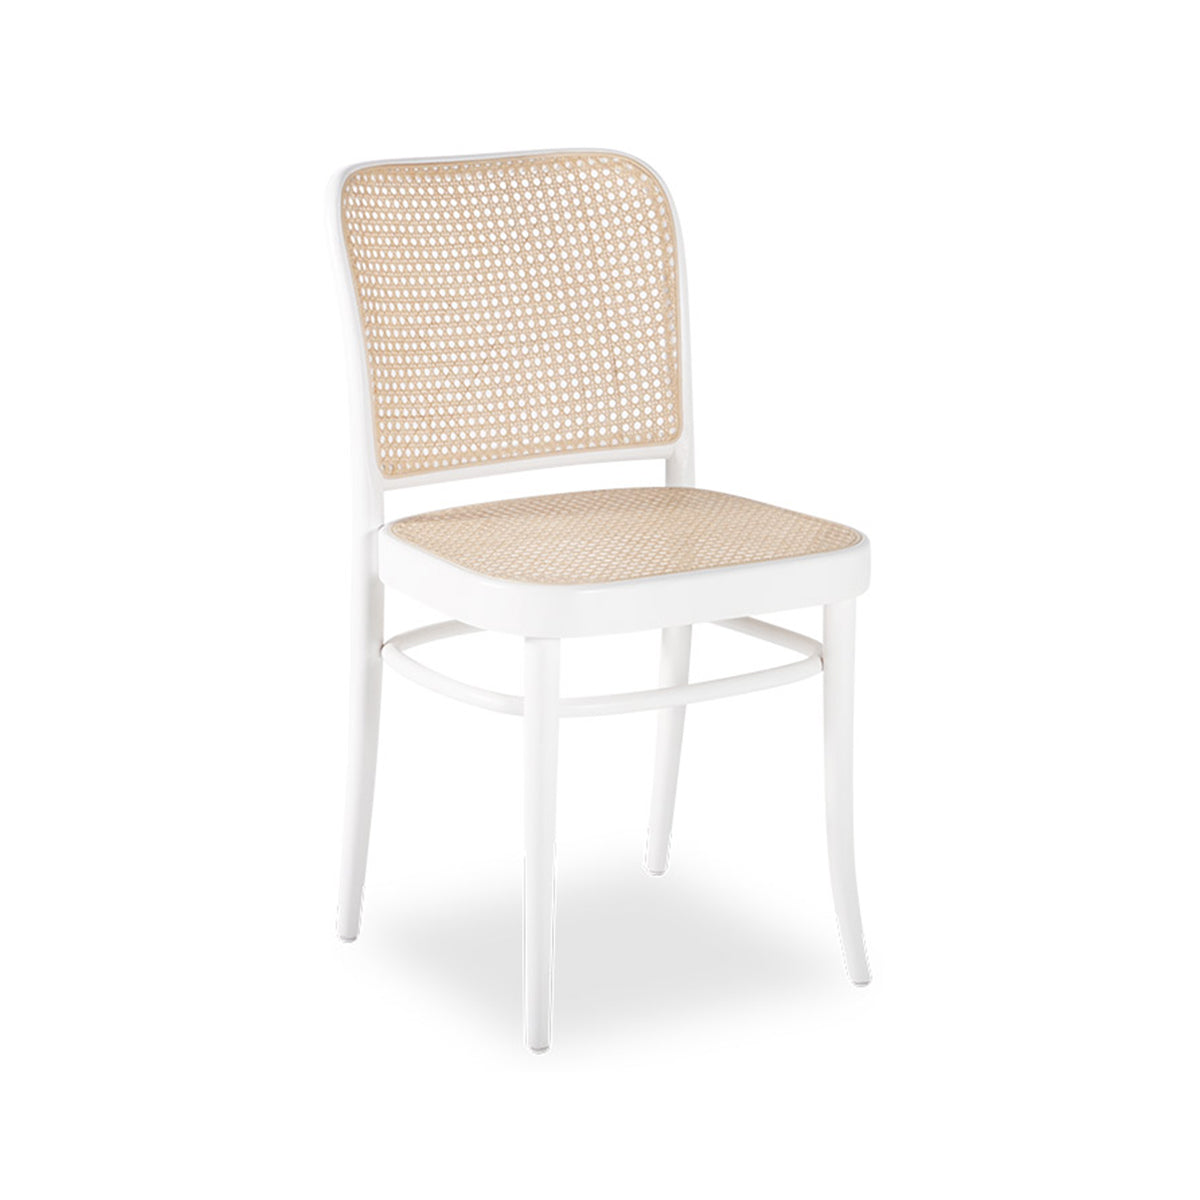 811 Hoffmann Chair - Cane Seat/Cane Backrest (White).